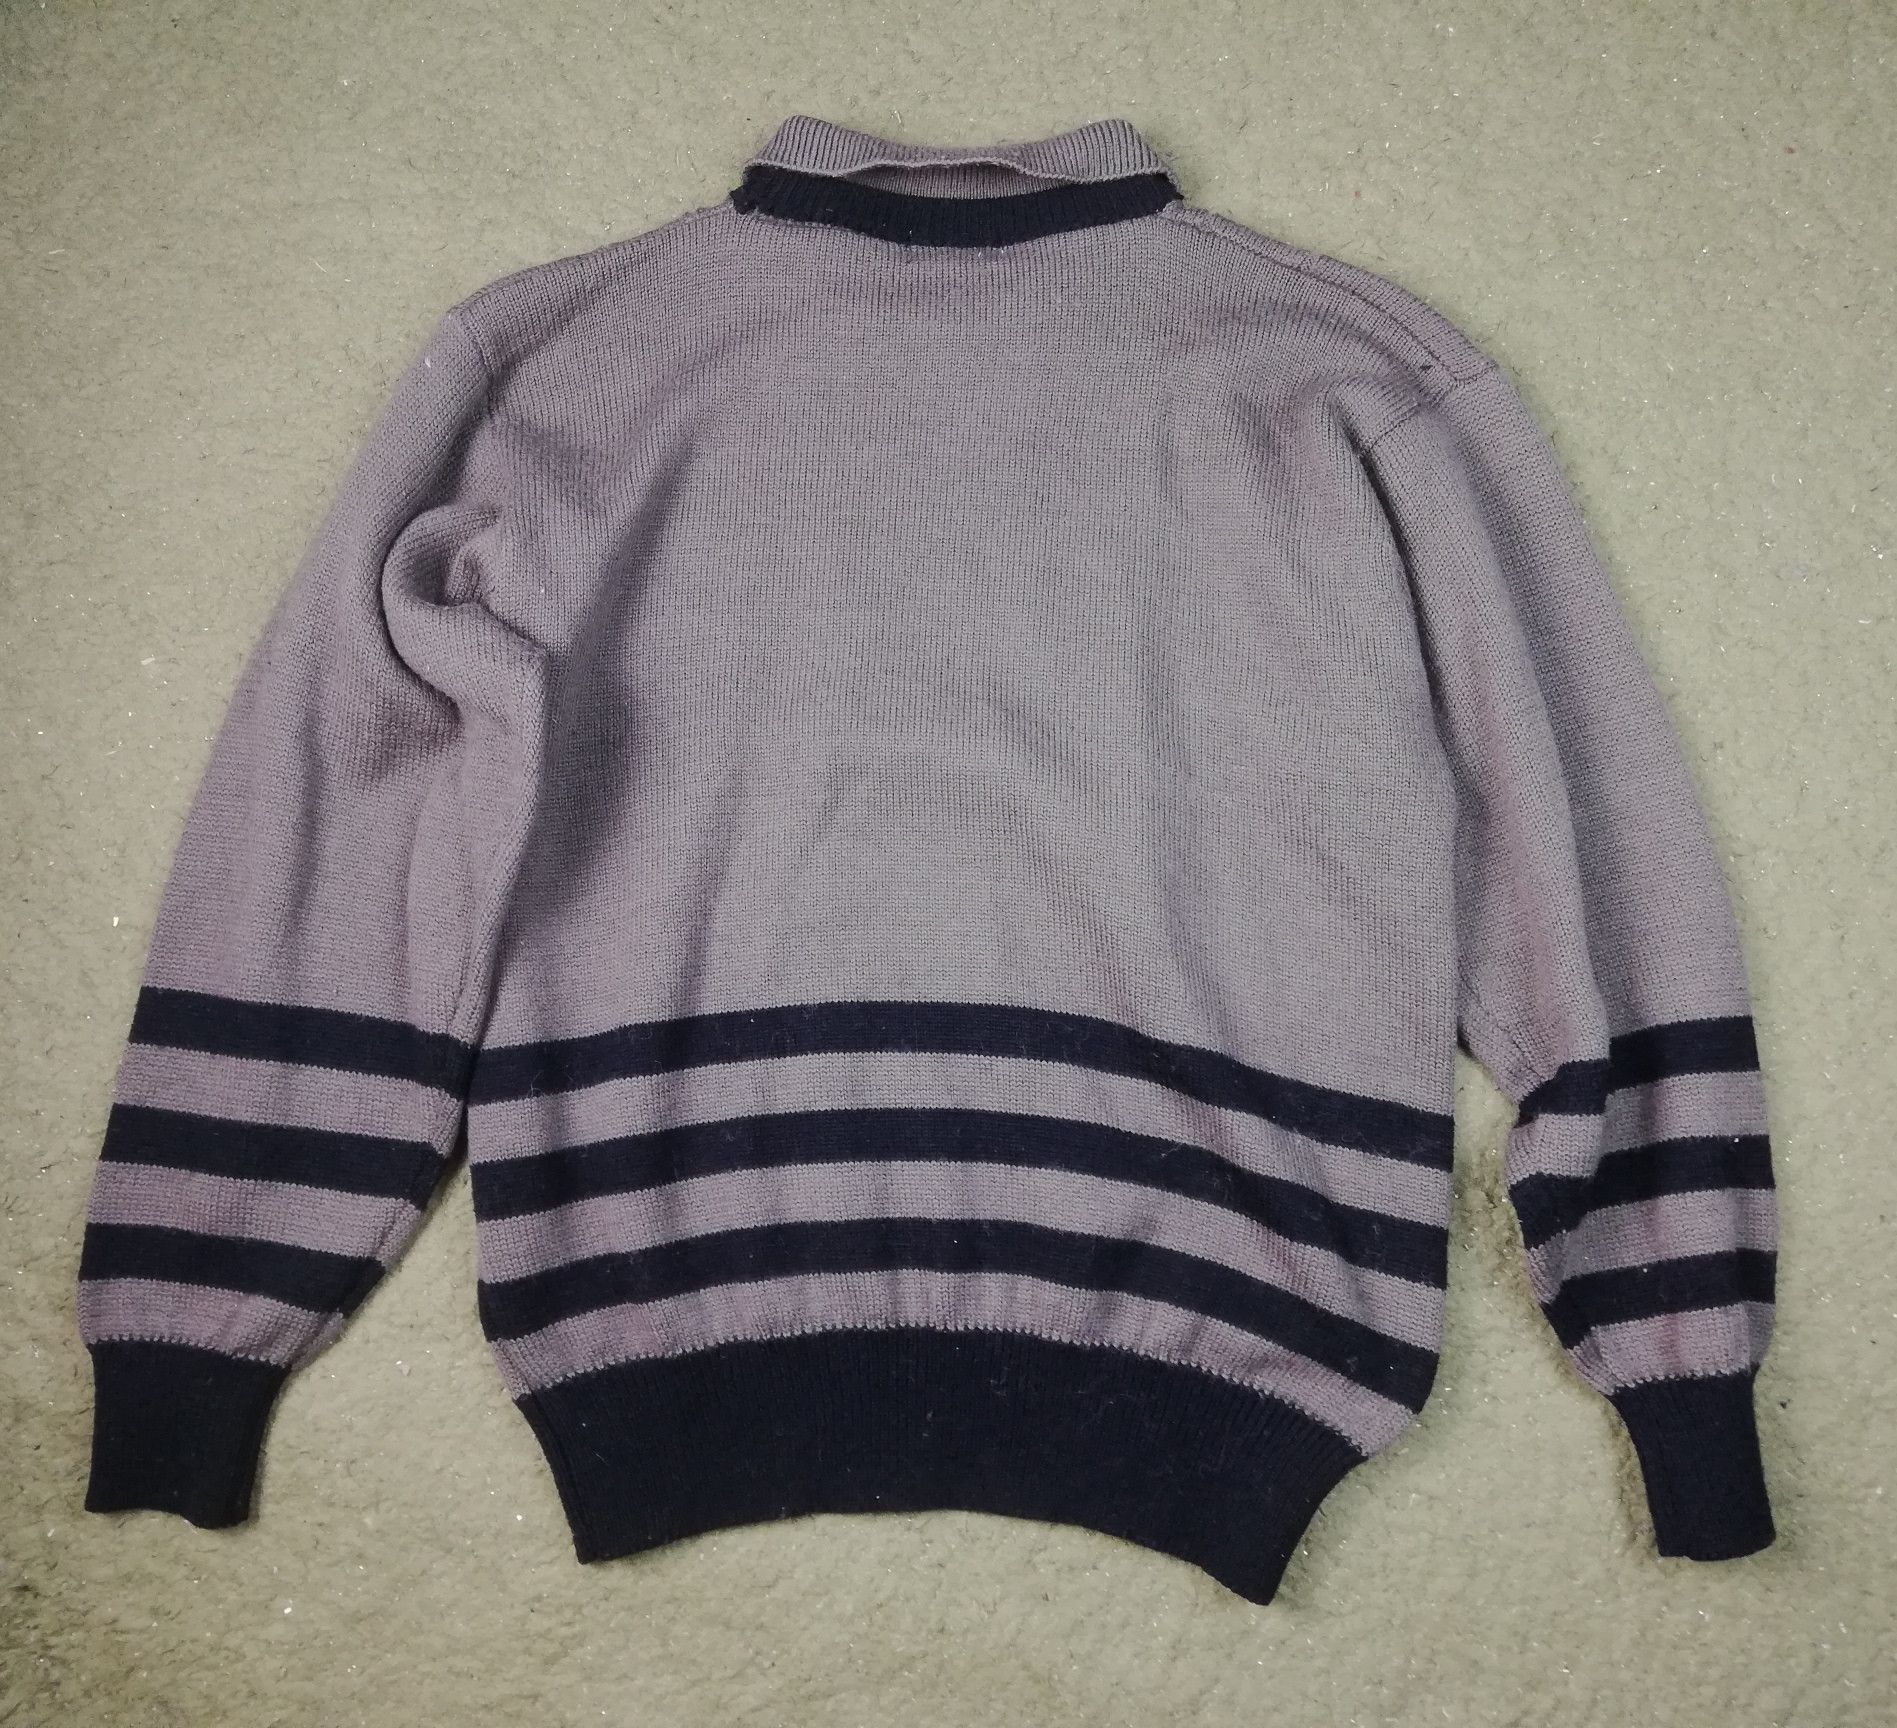 Vintage Vintage Guy Laroche Embroidered Logo Knitwear Sweater Size US M / EU 48-50 / 2 - 4 Thumbnail